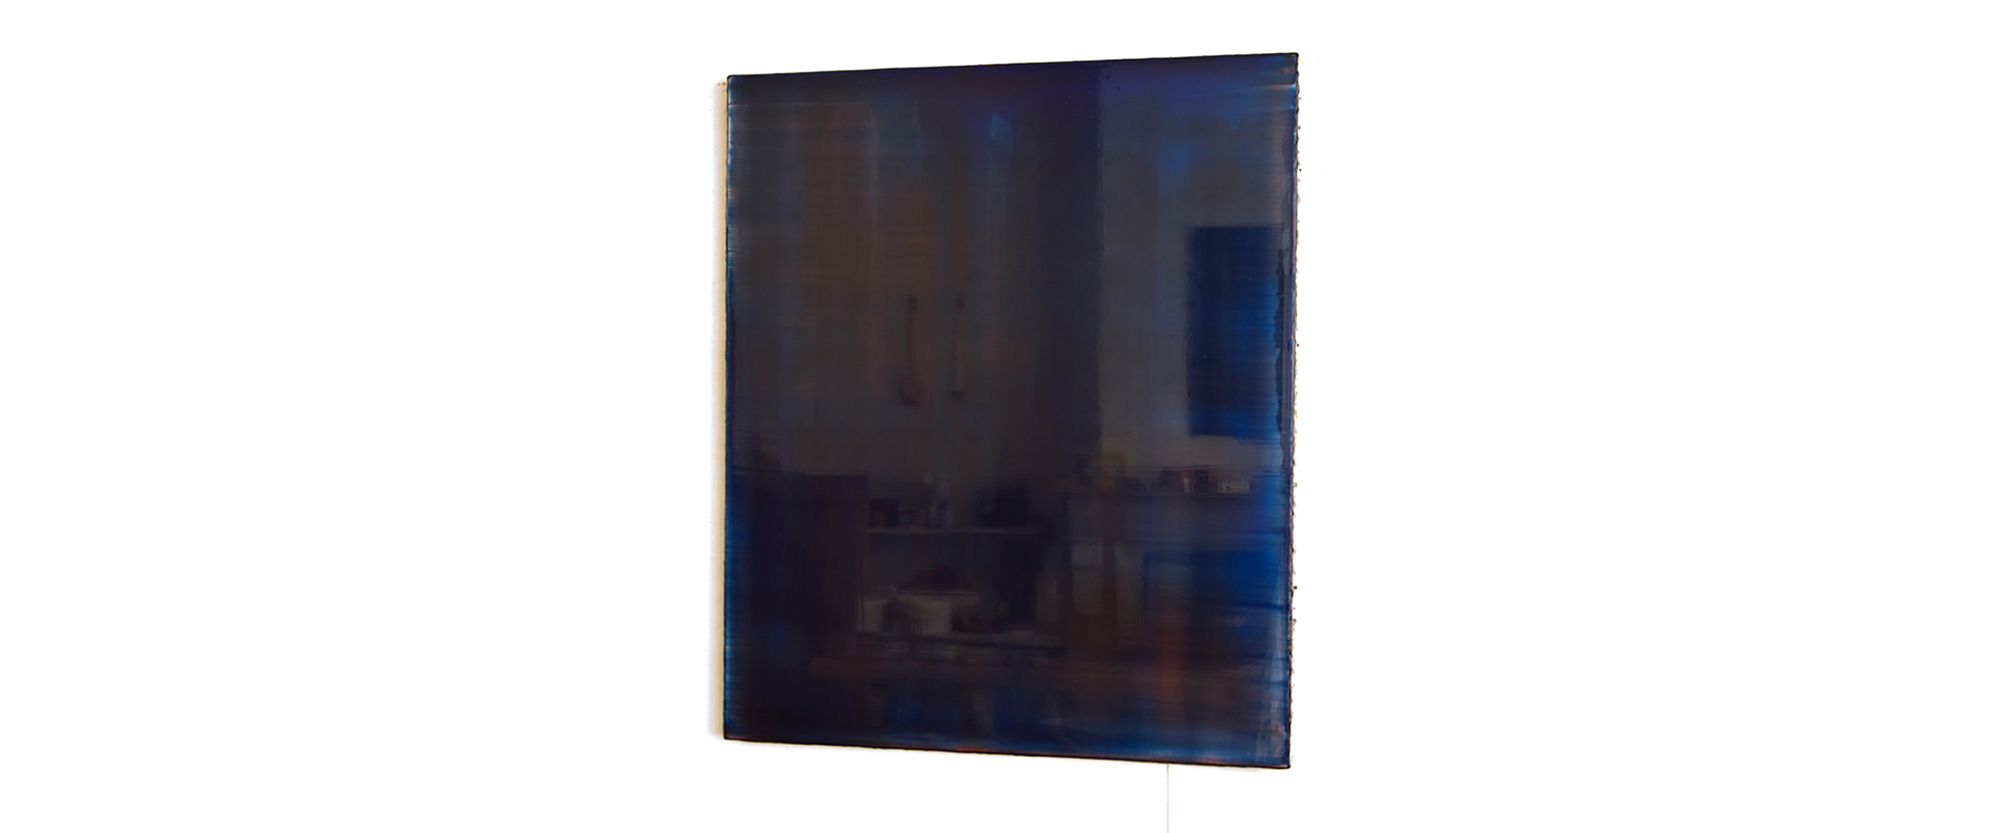 20101231 - 2010, Acryl auf Leinwand, 70 x 60 cm